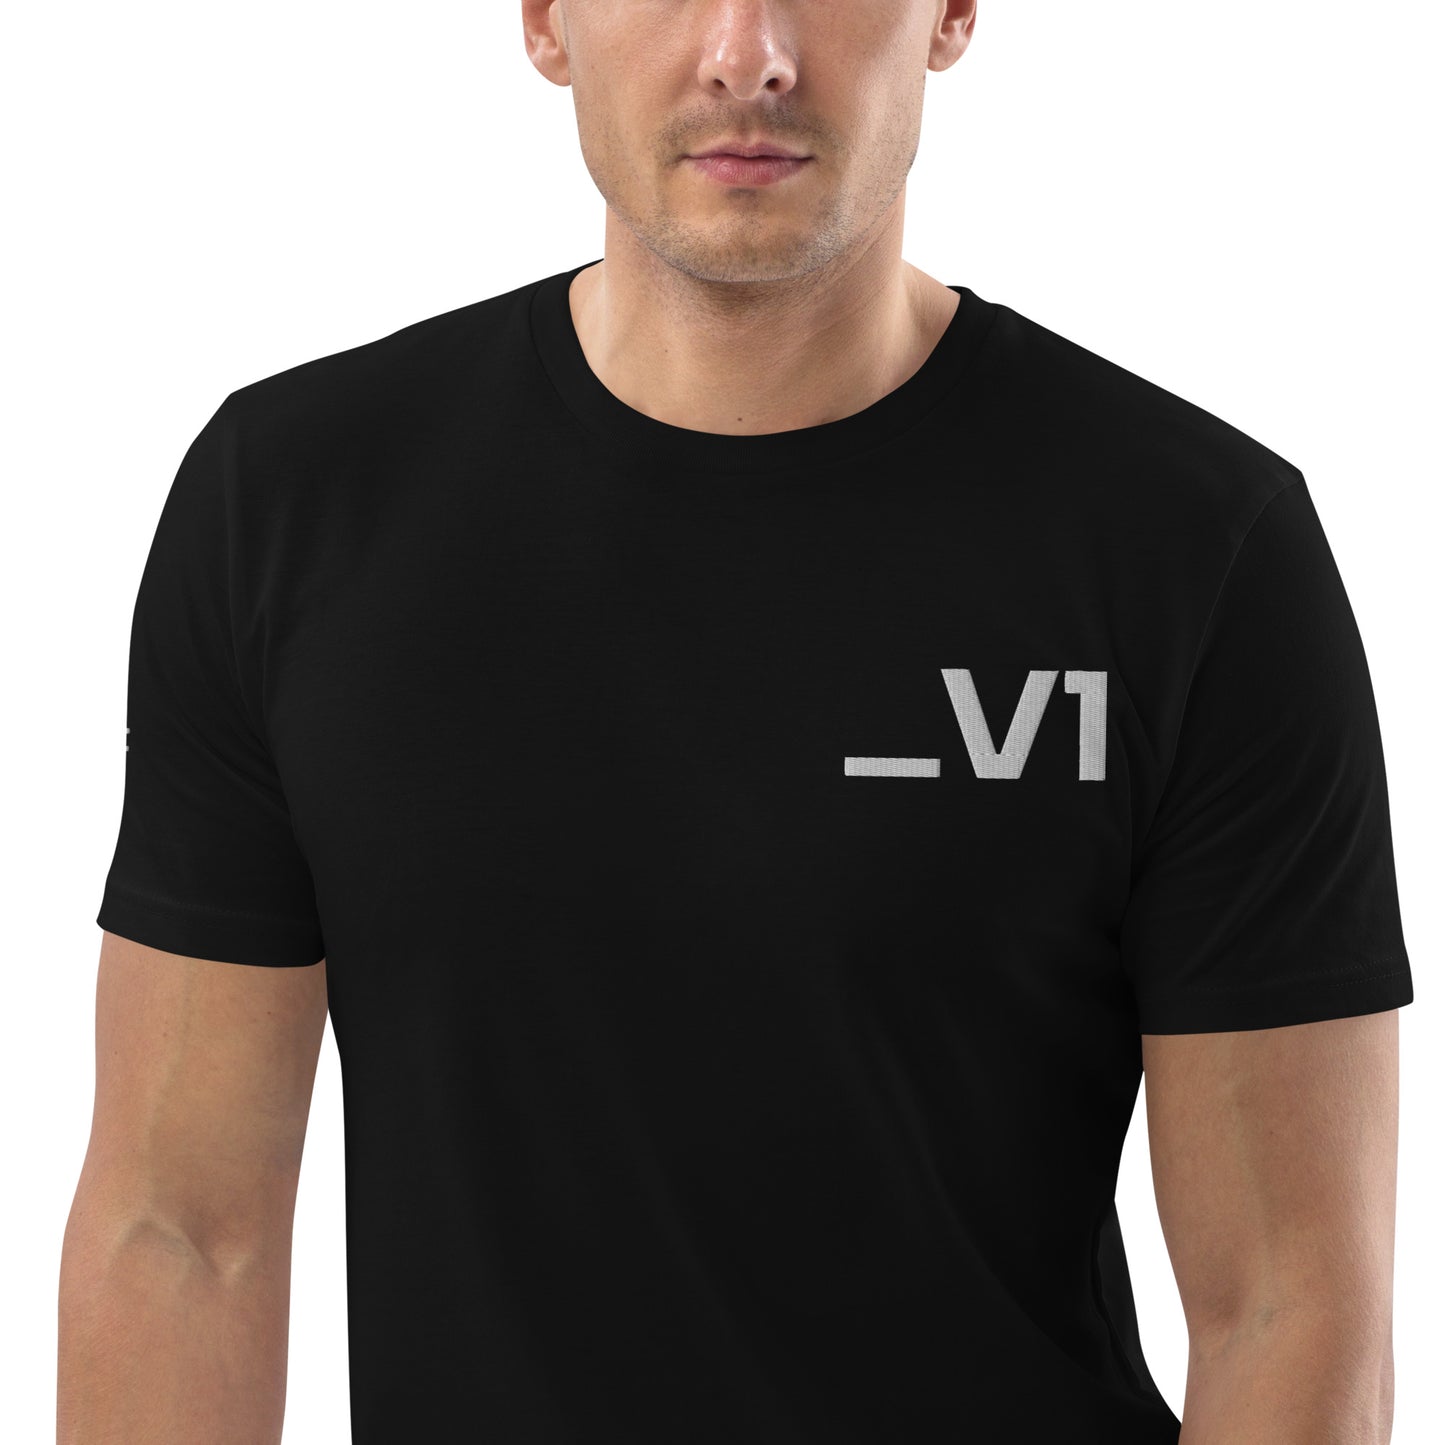 _V1 Embroidered Unisex organic cotton t-shirt